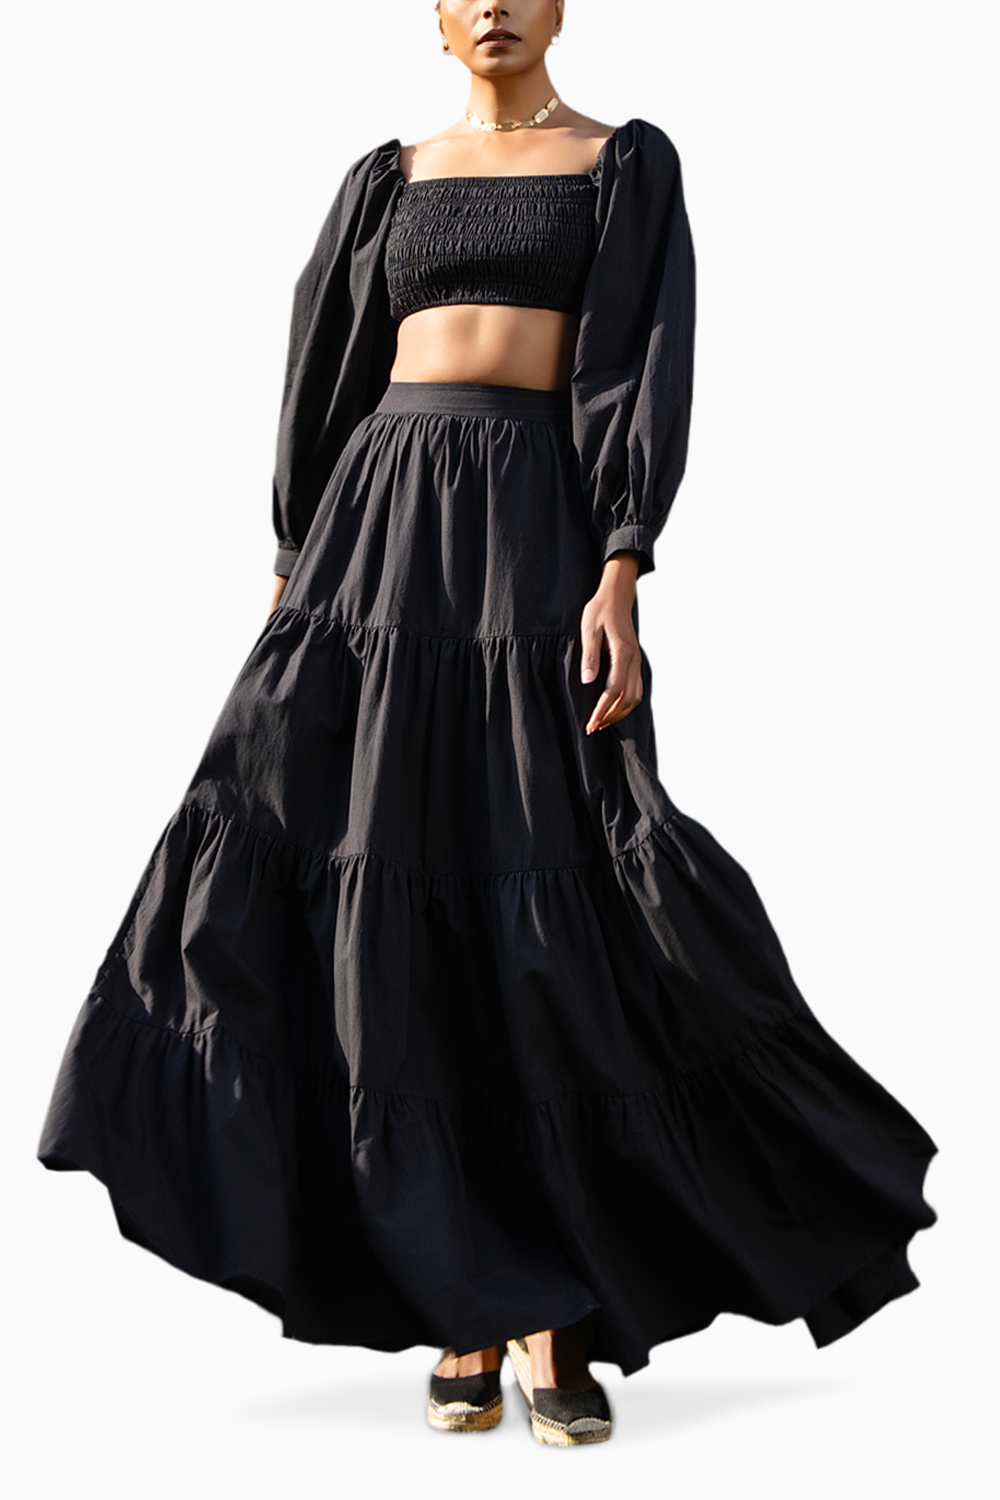 Livia Black Top with Skirt Set